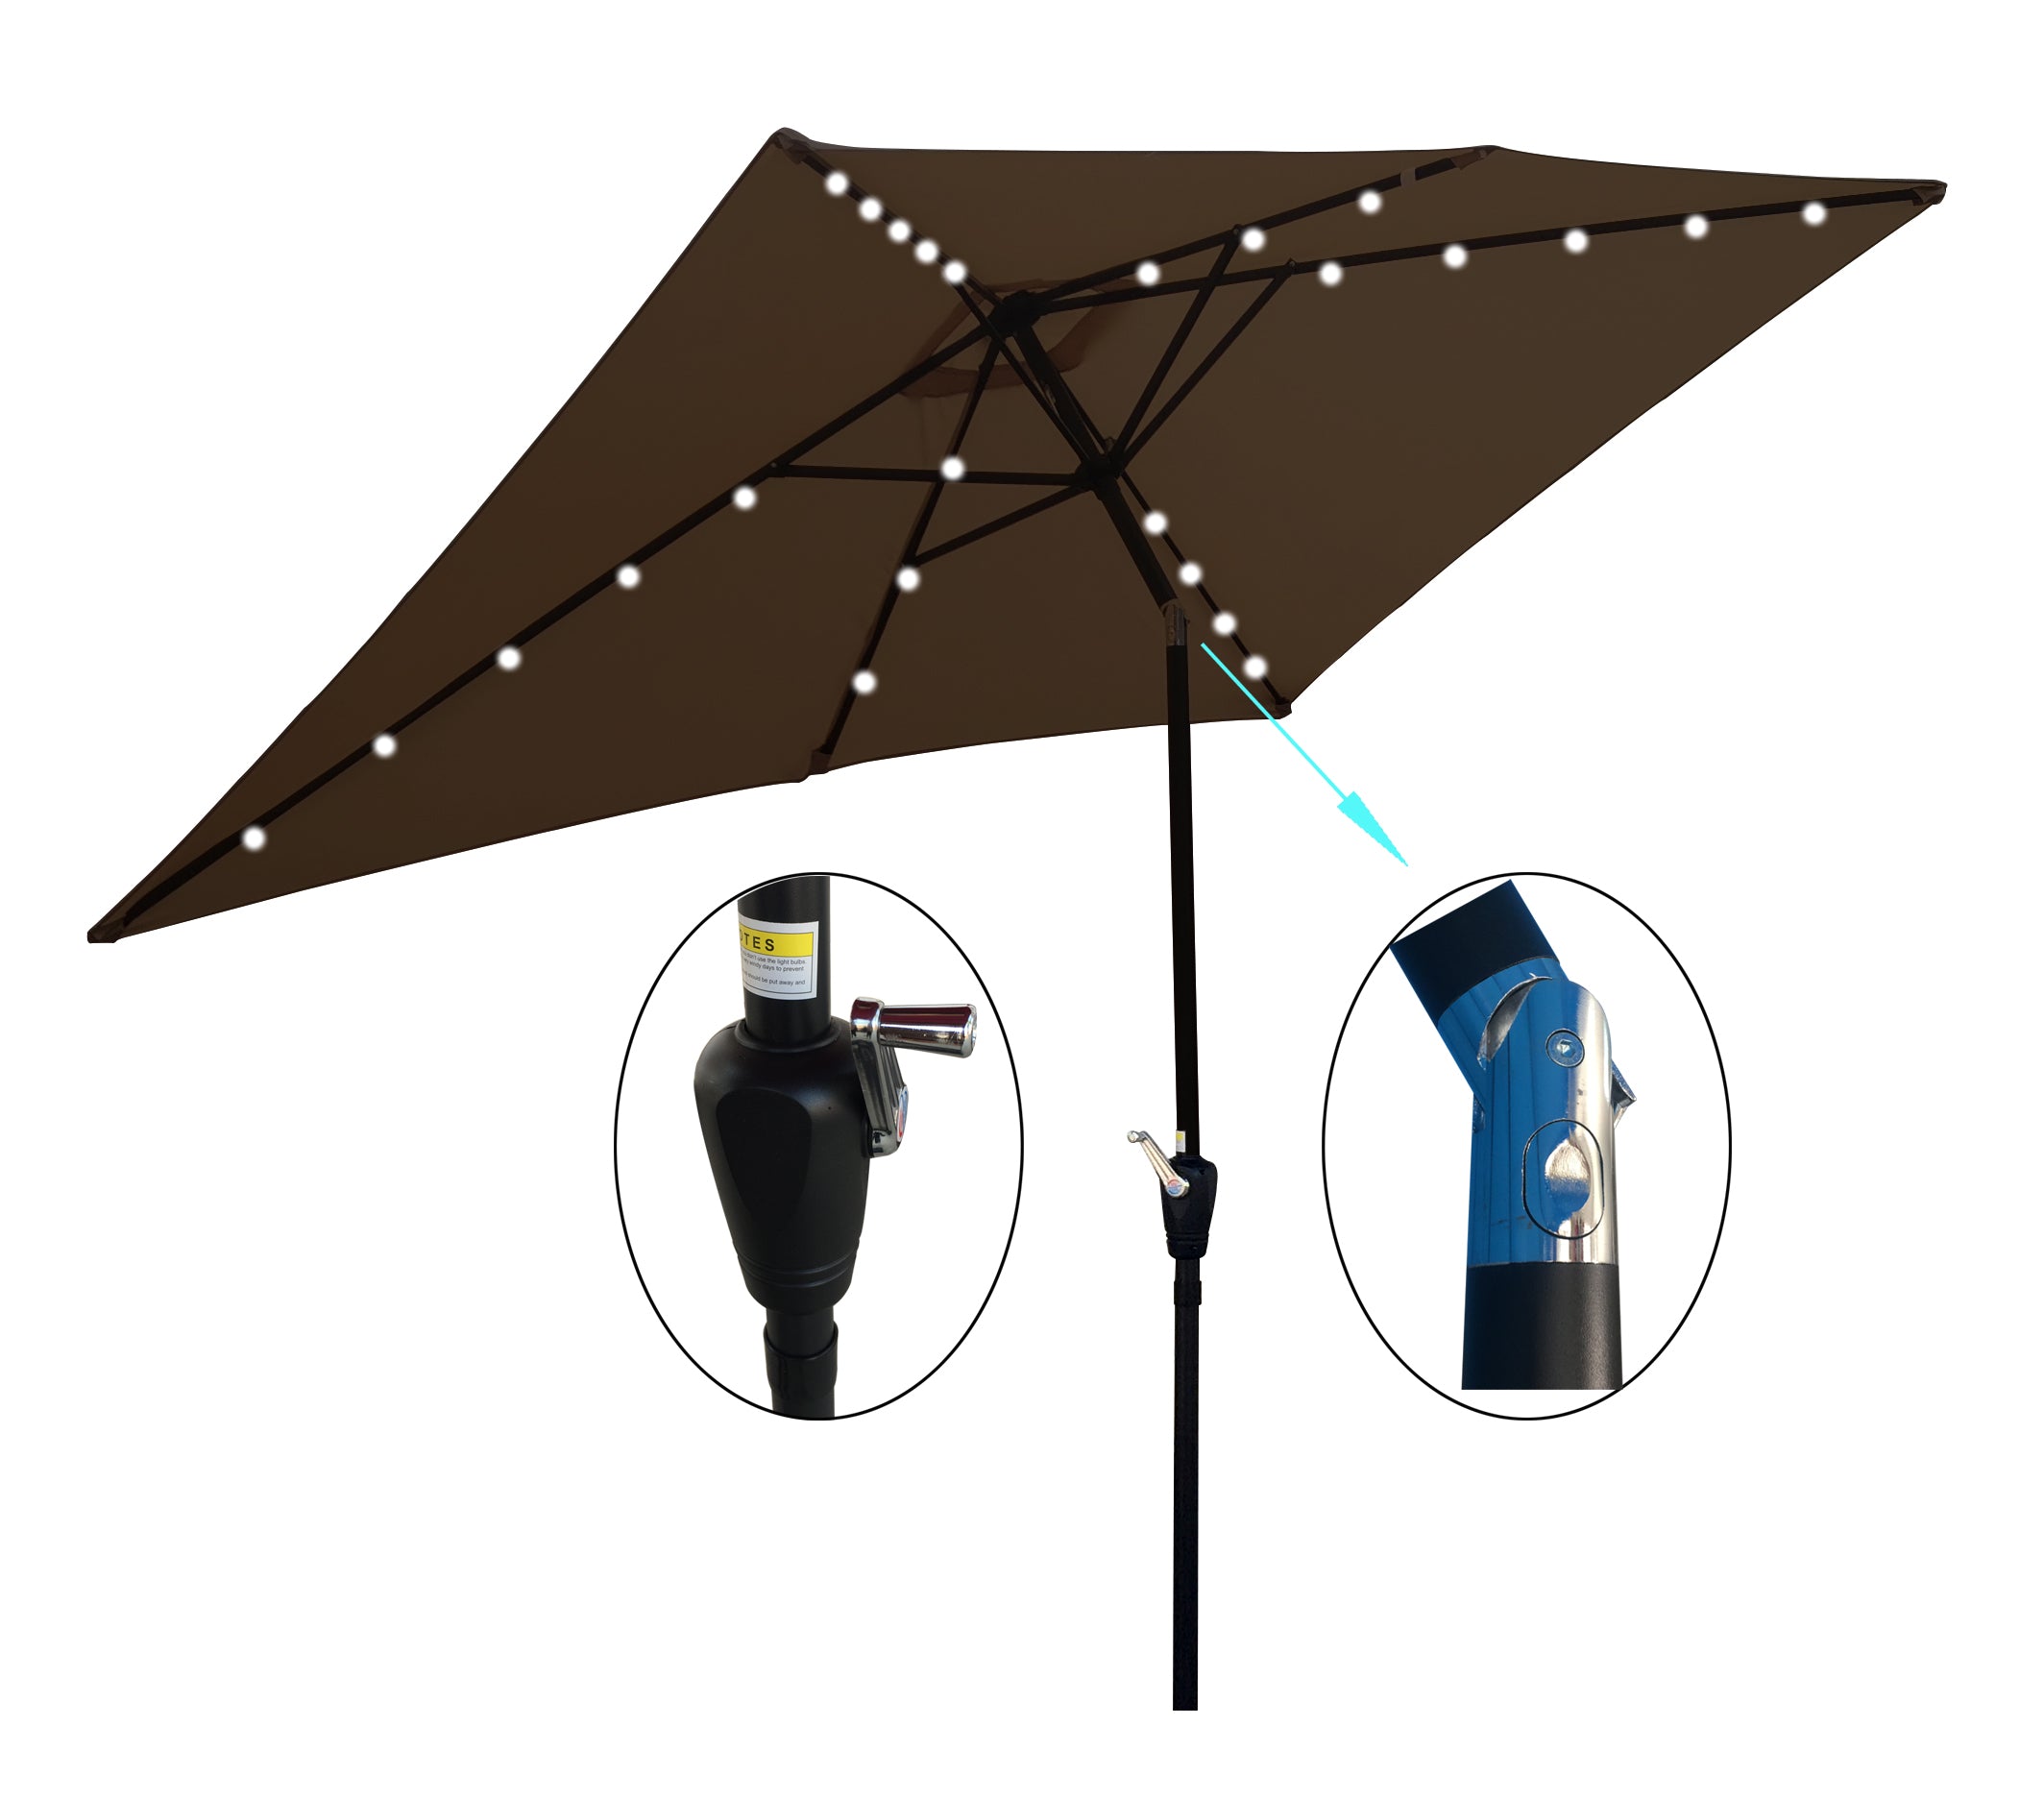 [KGORGE Plus] 10ft x 6.5ft Solar LED Lighting Rectangular Outdoor Umbrella for Garden Backyard Pool